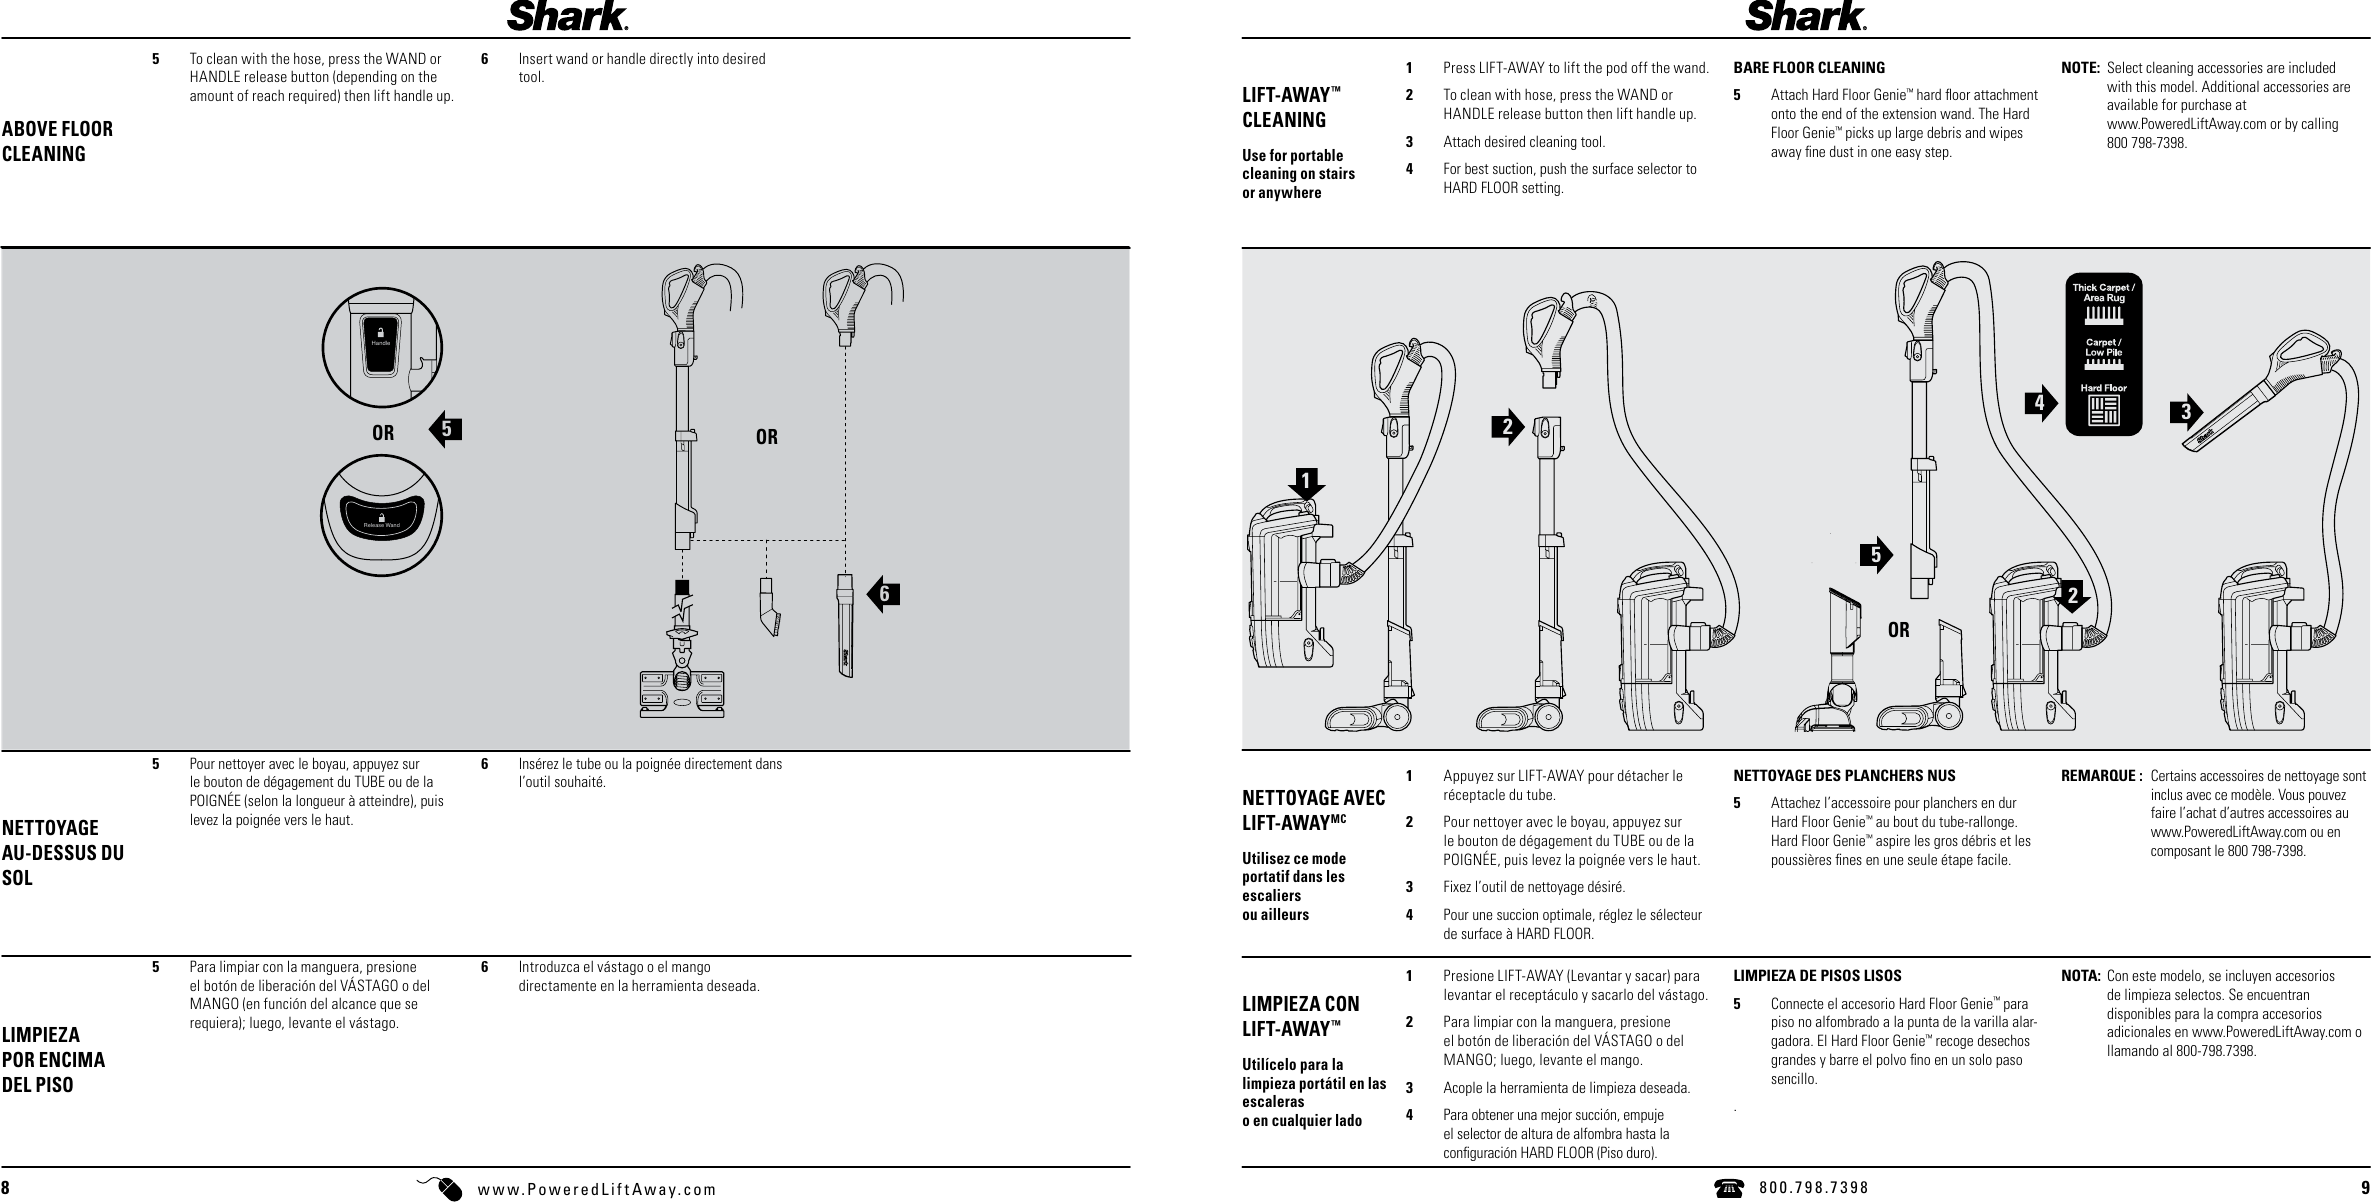 Page 5 of 11 - Shark Shark-Shark-Rotator-Powered-Lift-Away-Upright-Vacuum-Nv650W-Owners-Guide-  Shark-shark-rotator-powered-lift-away-upright-vacuum-nv650w-owners-guide